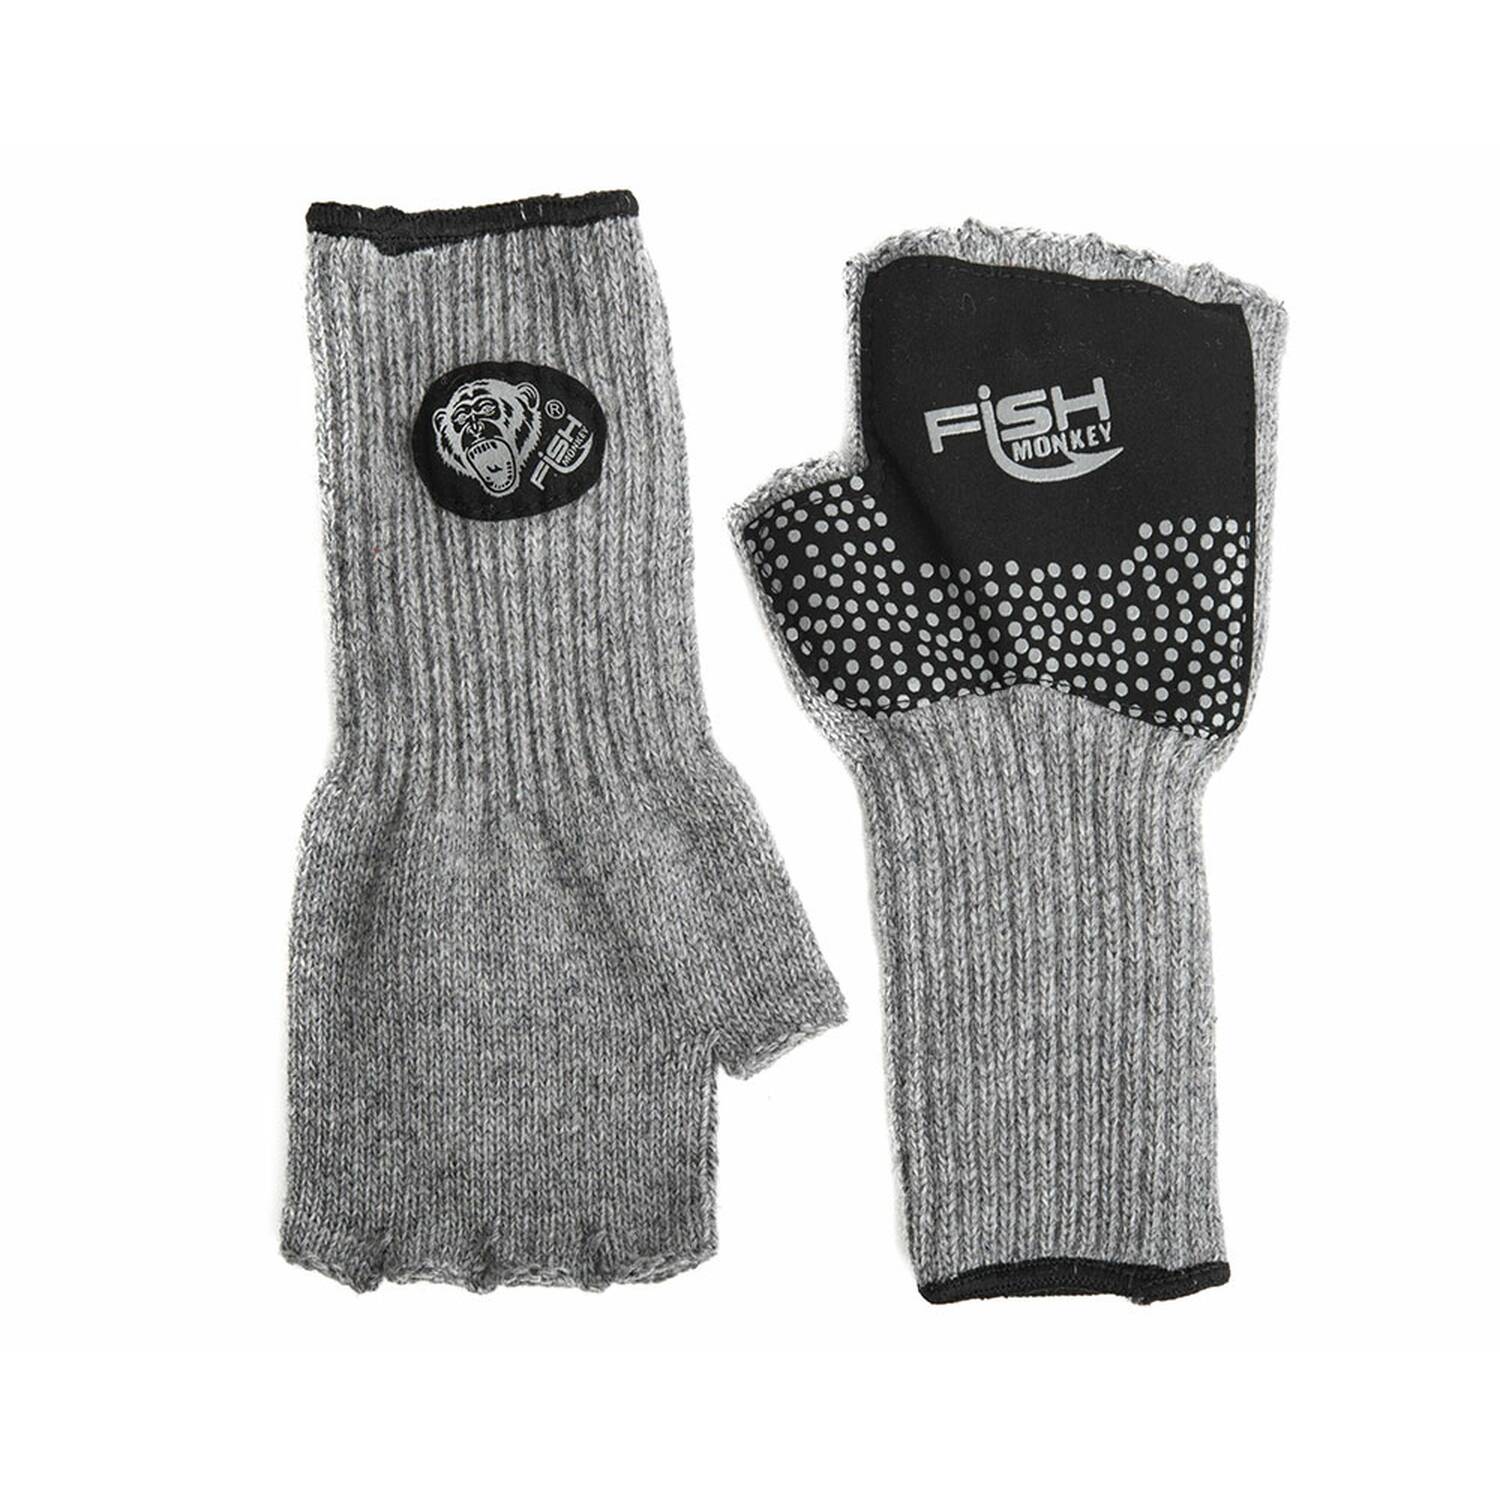 Fish Monkey Bauers Grandma Wool Glove Gloves